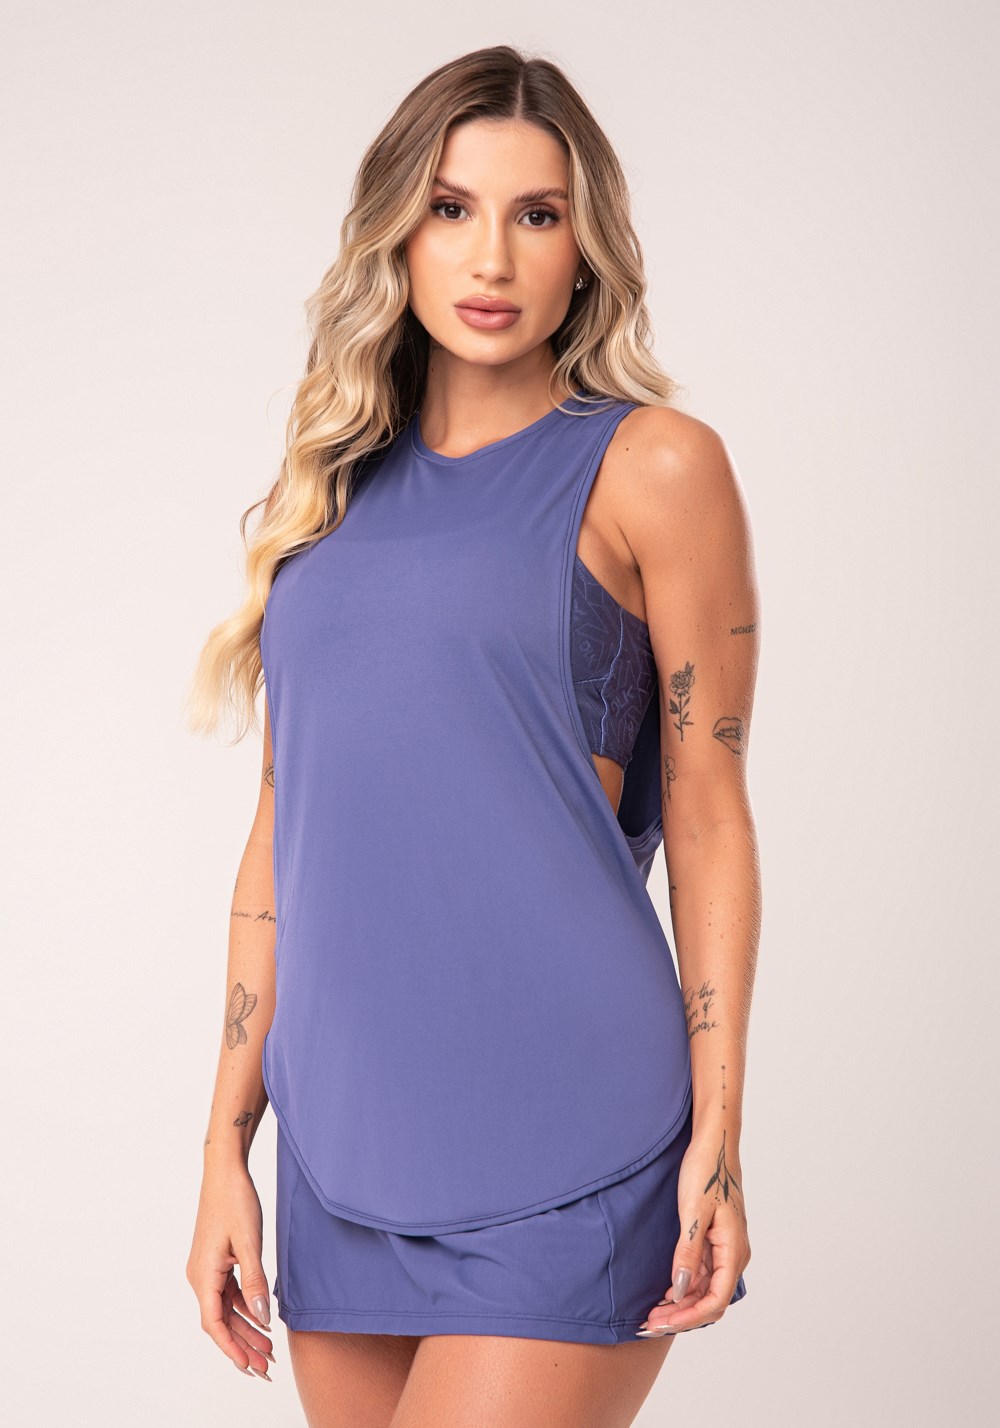 Camiseta fitness feminina azul maxi cava alongada flow